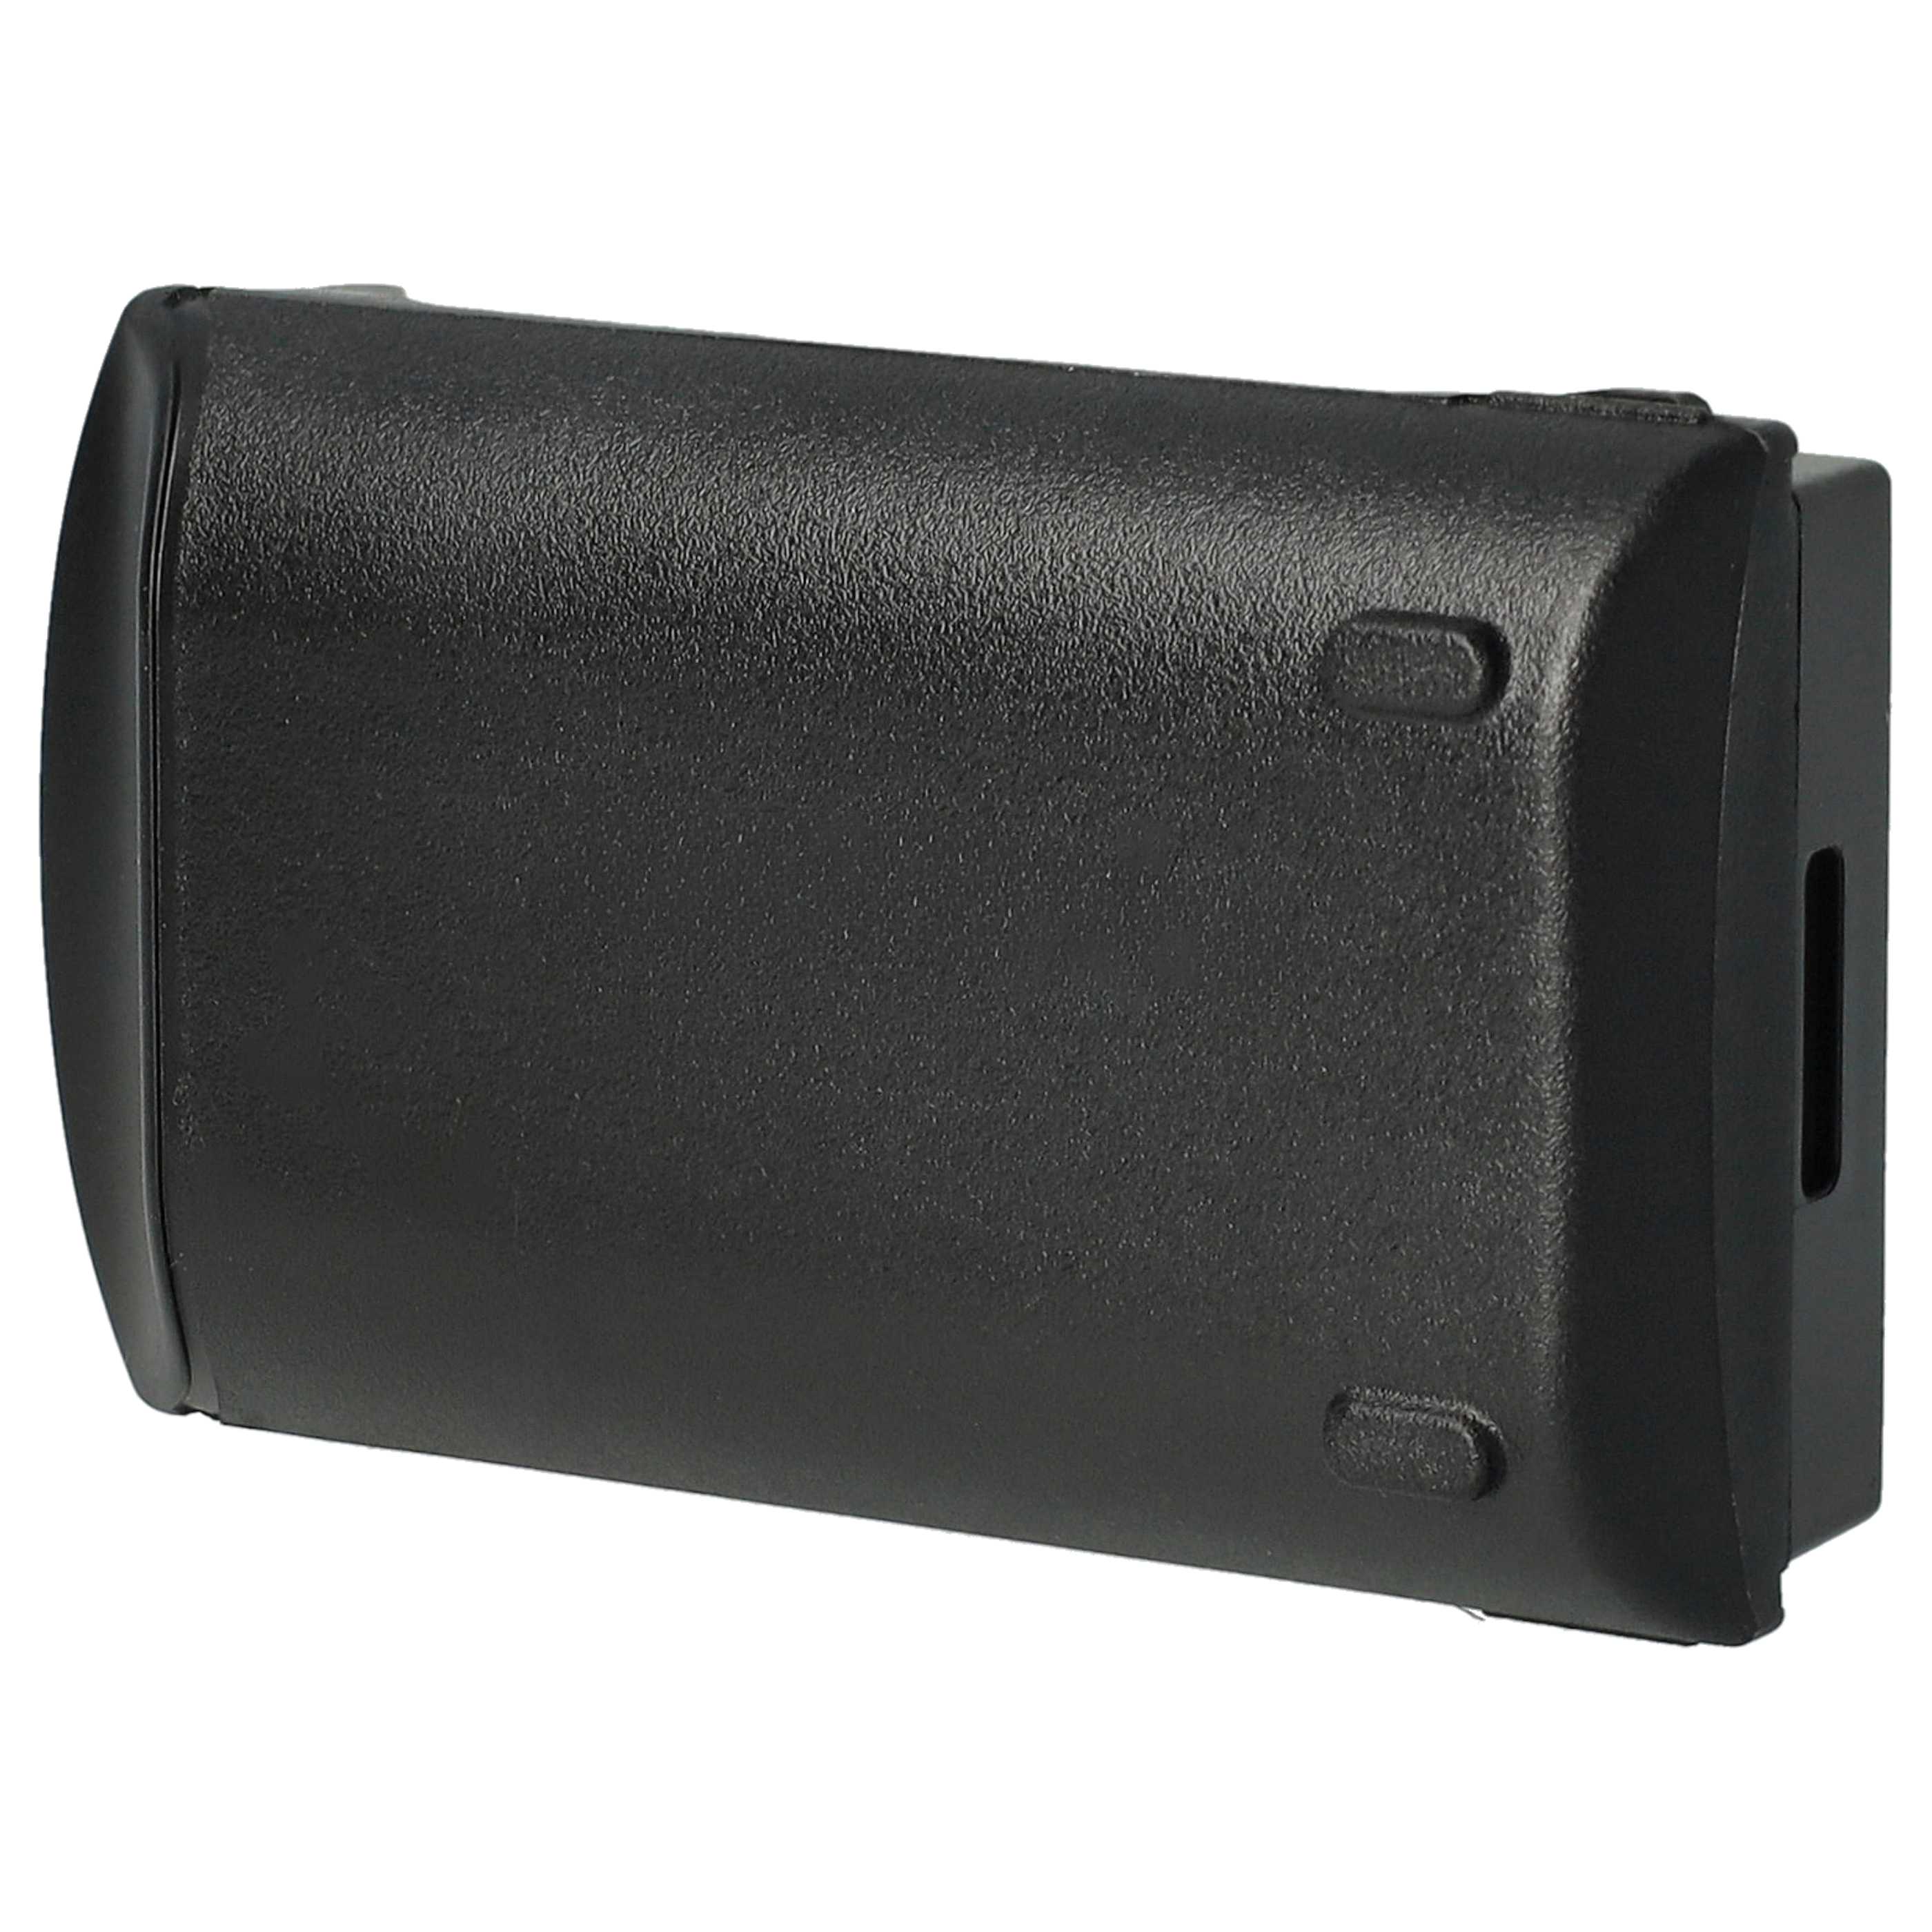 Barcode Scanner POS Battery Replacement for Motorola BTRY-MC32-01-01 - 5200mAh 3.7V Li-Ion